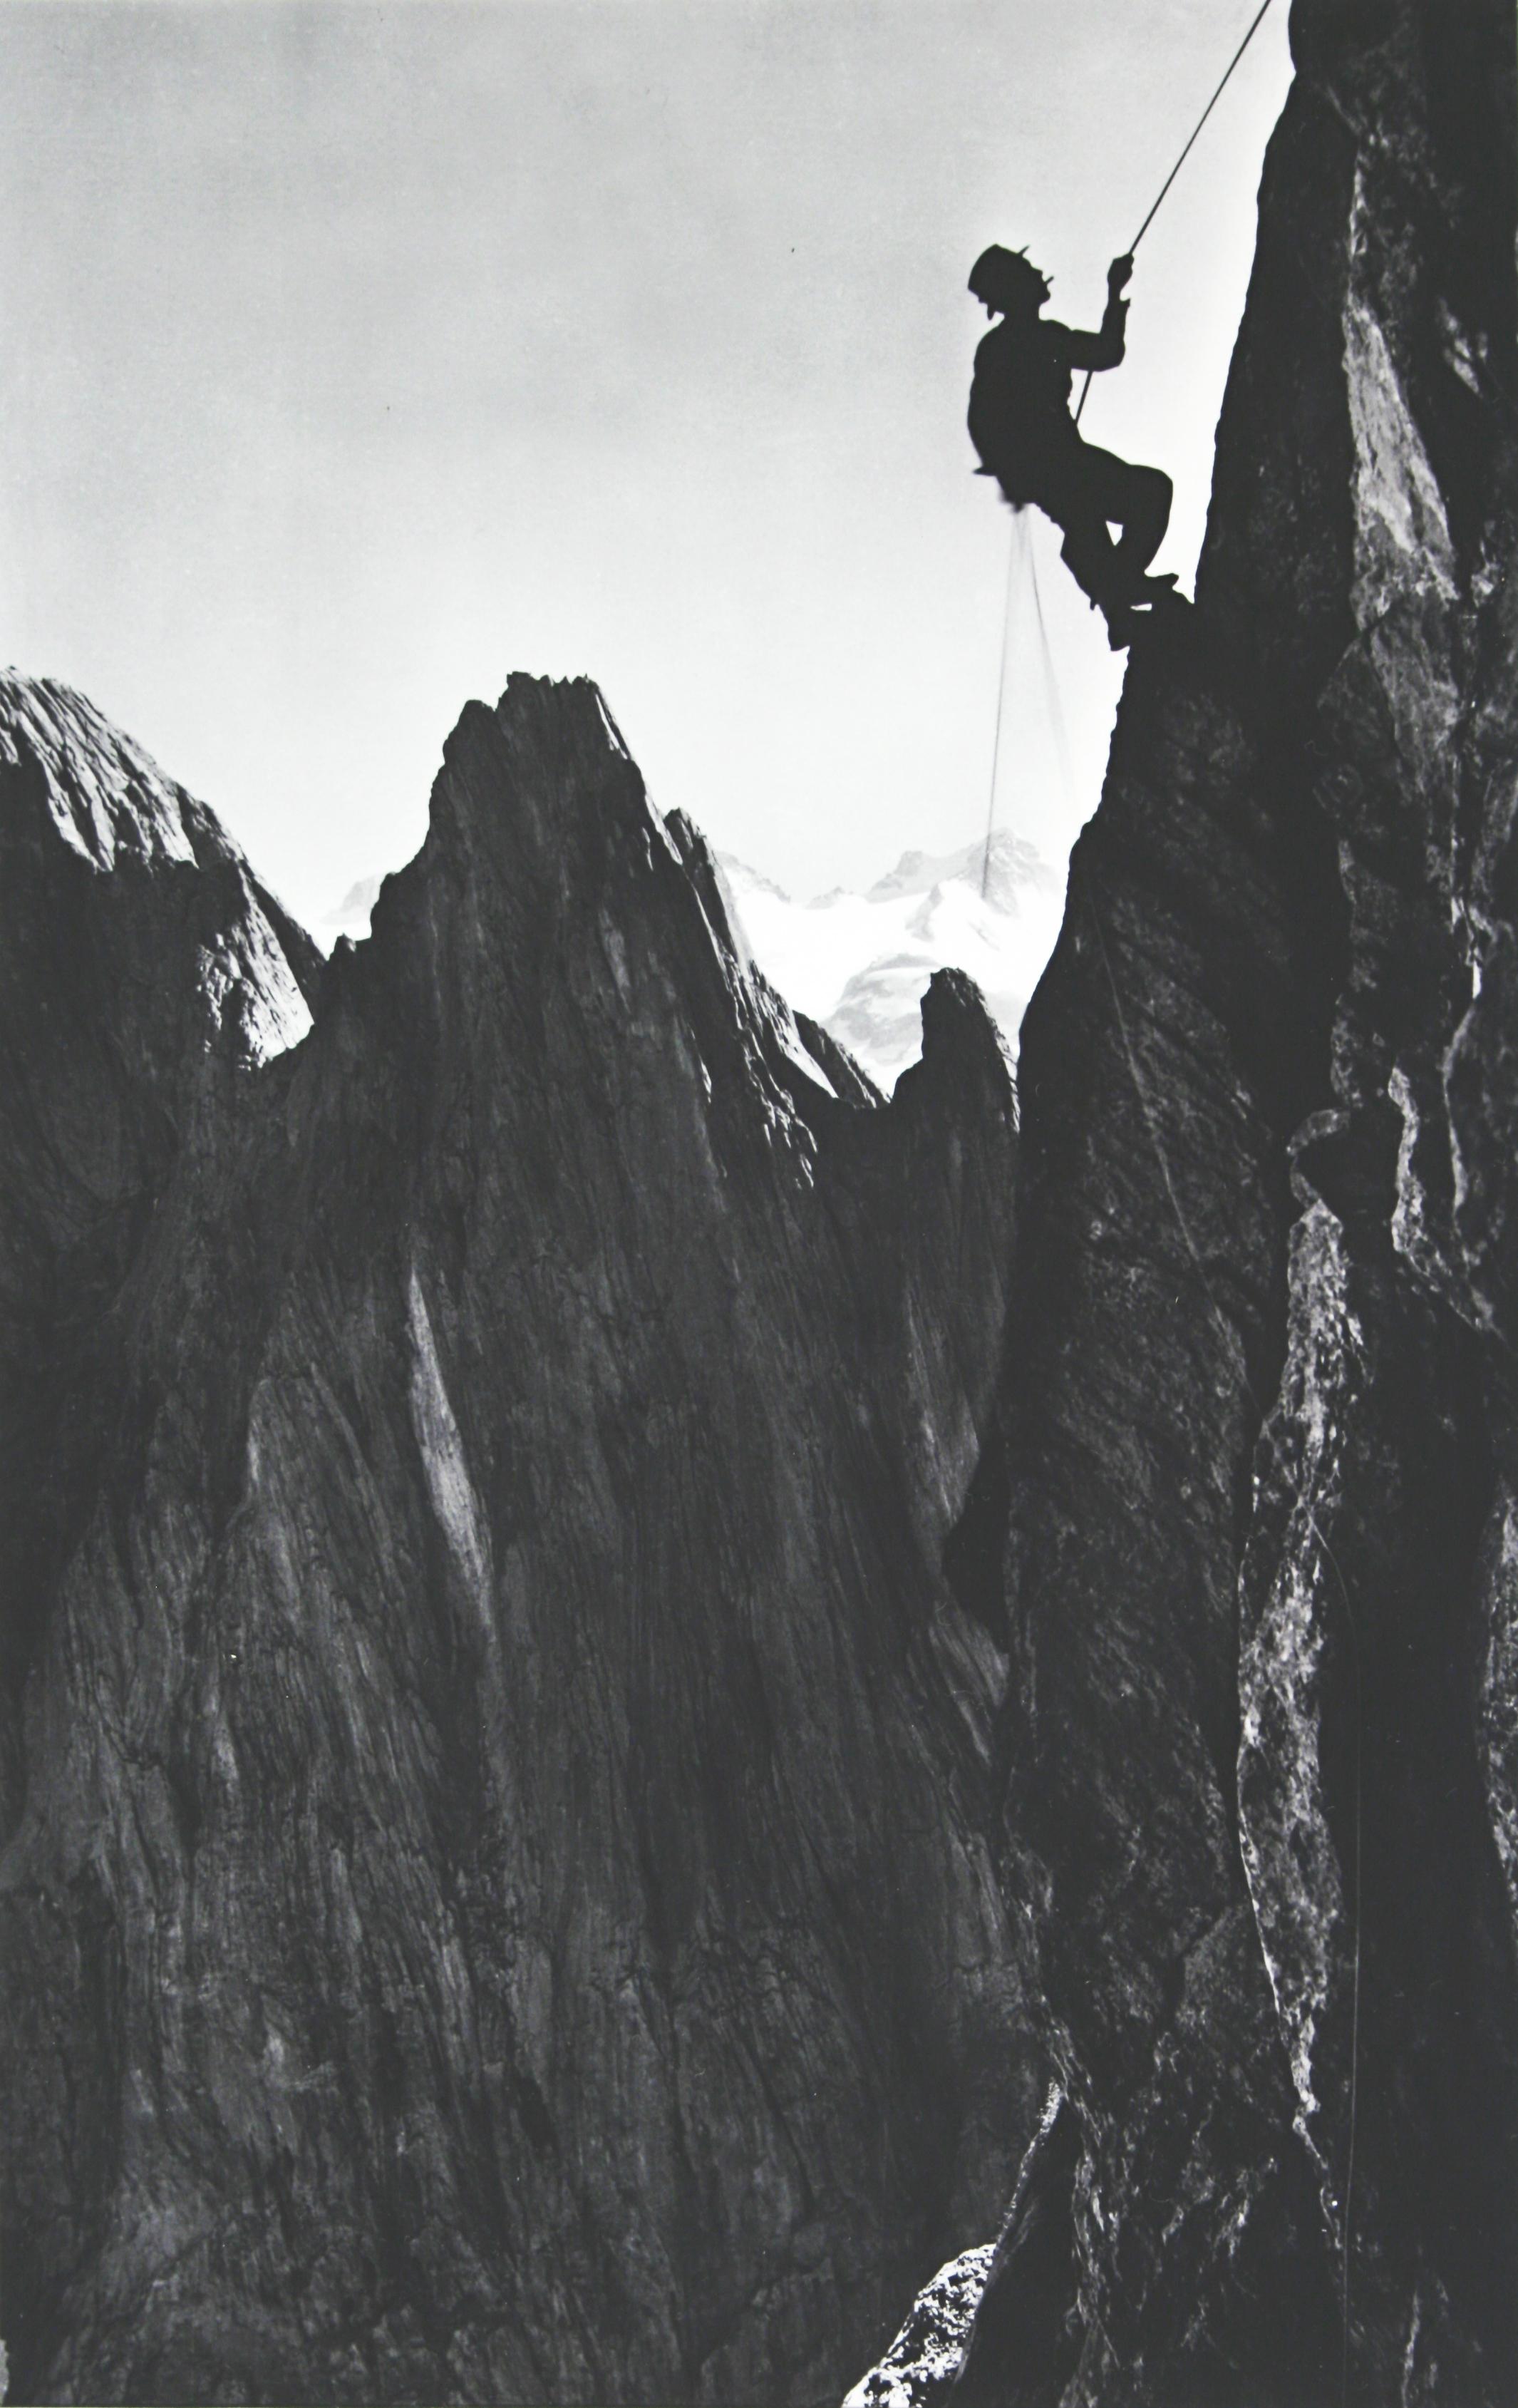 Vintage Alpine photograph.
